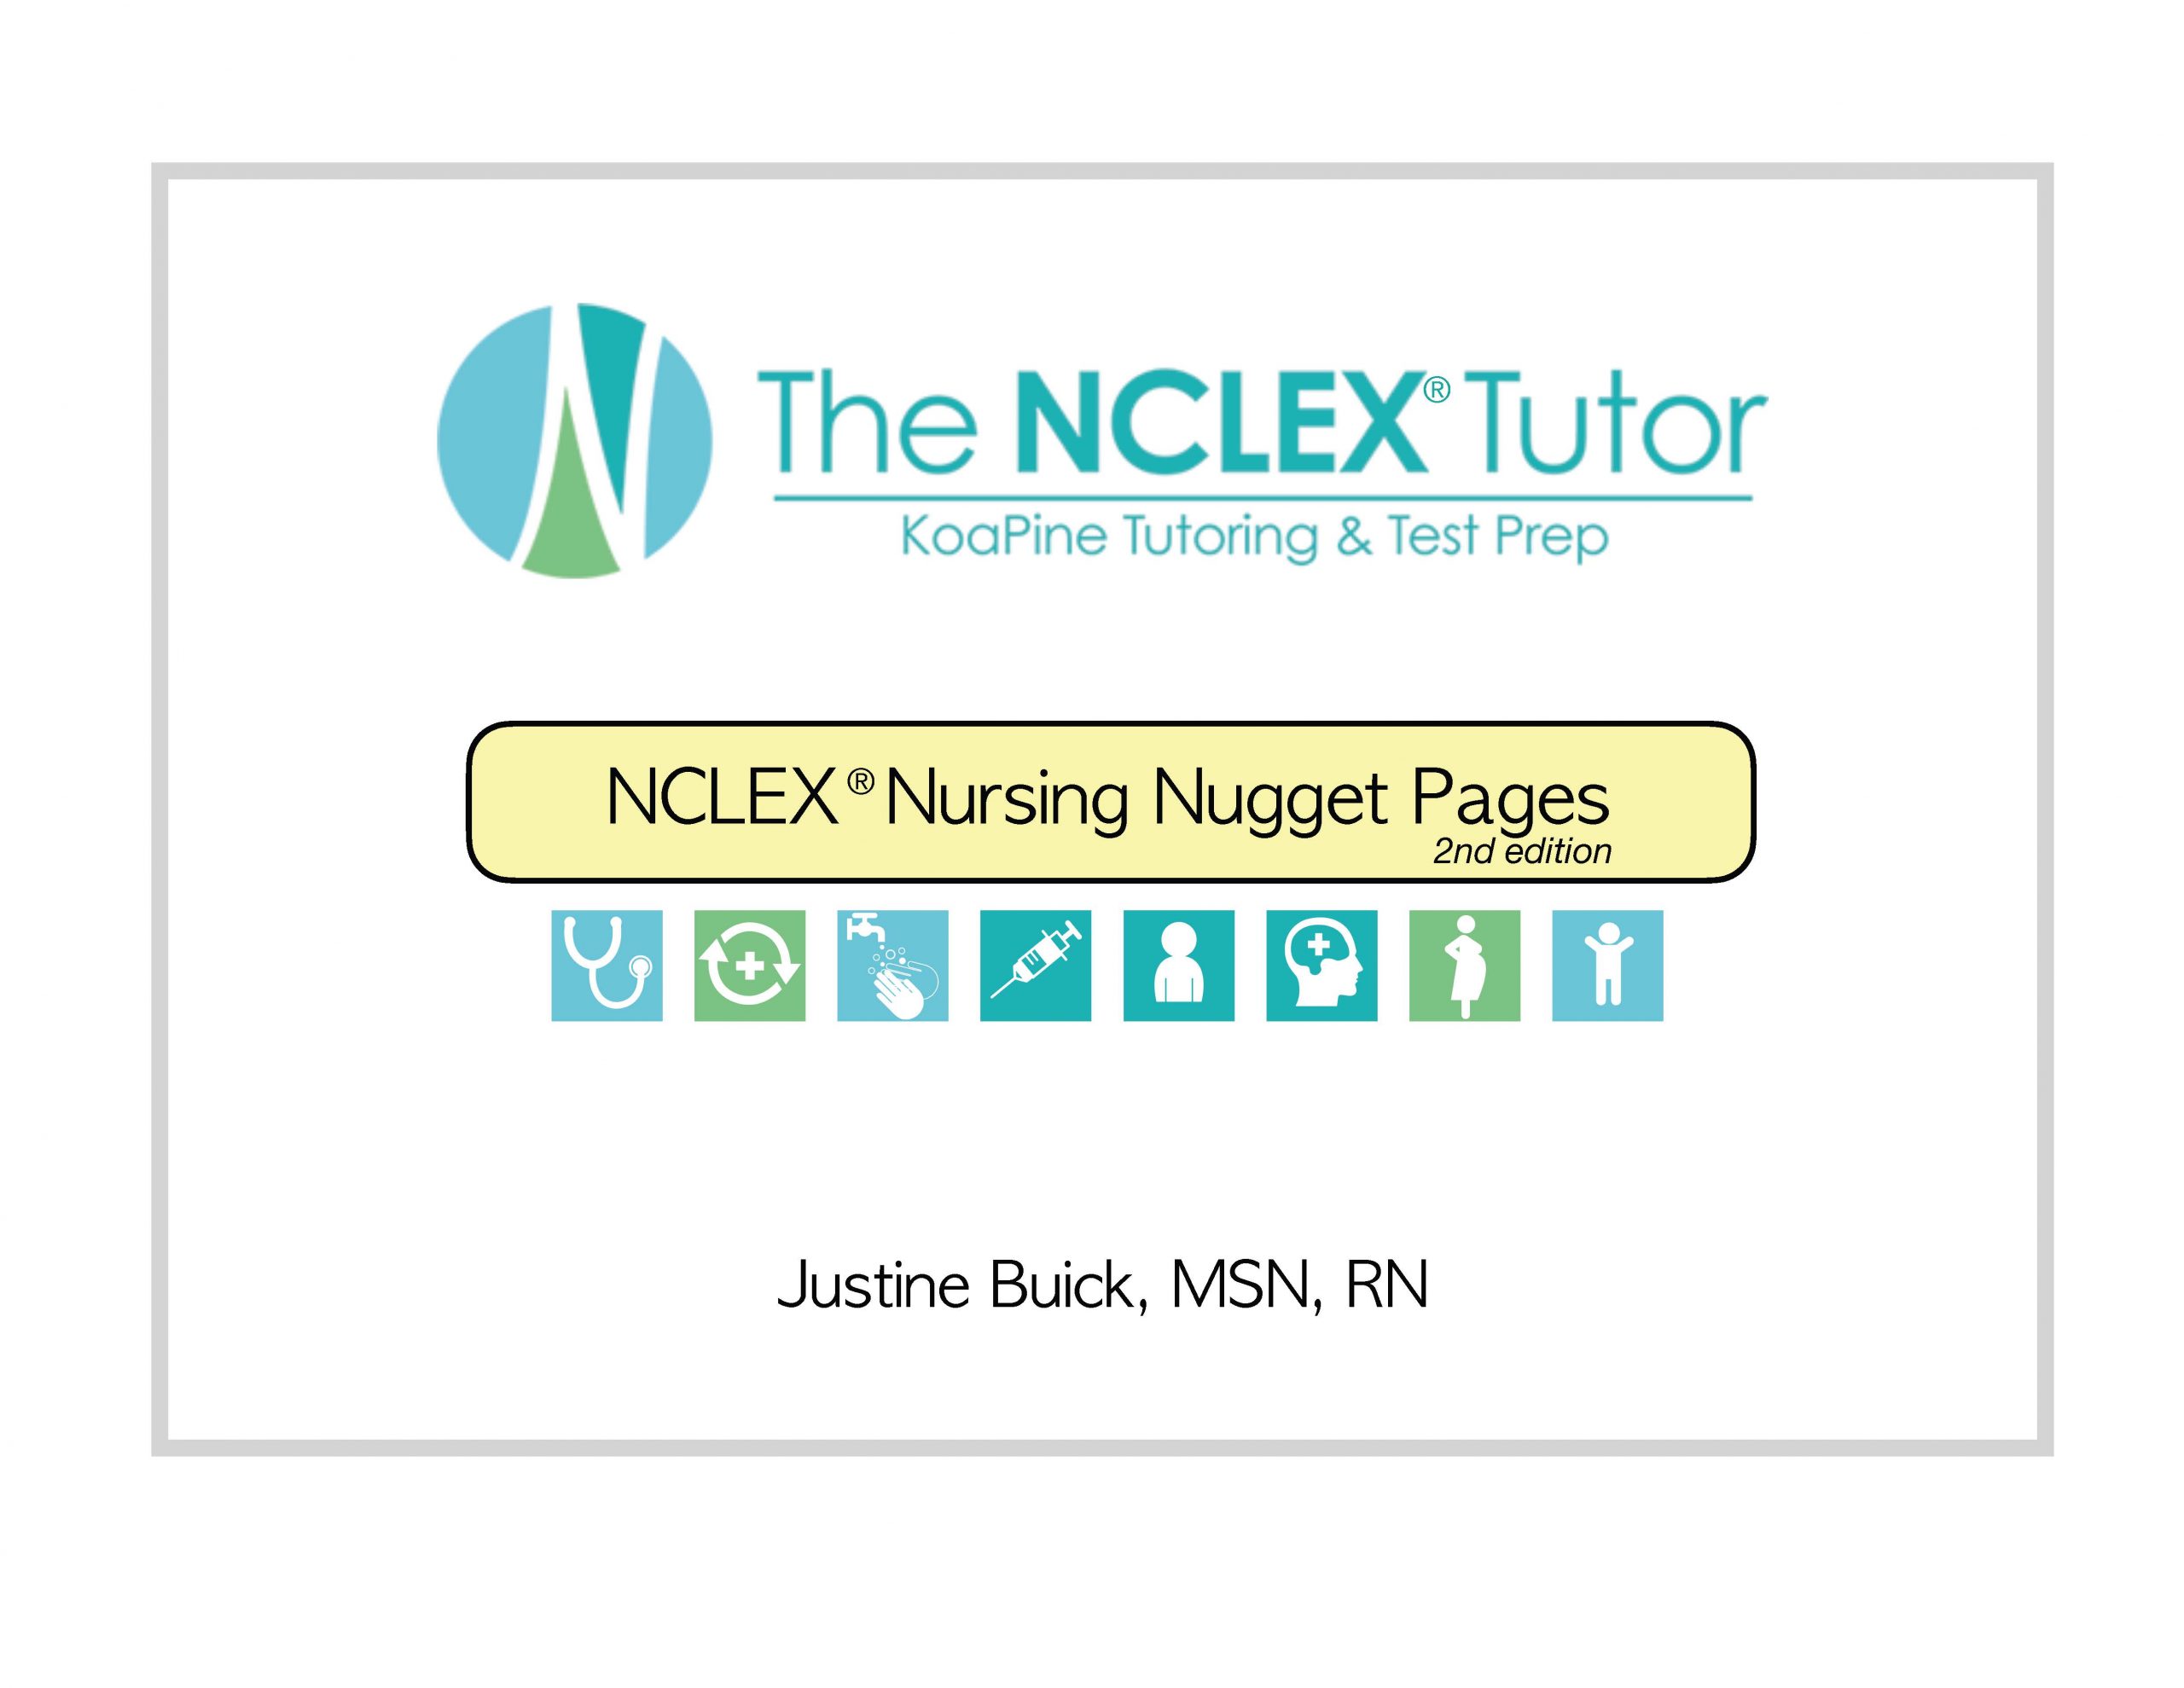 Next Gen NCLEX Products & Tools